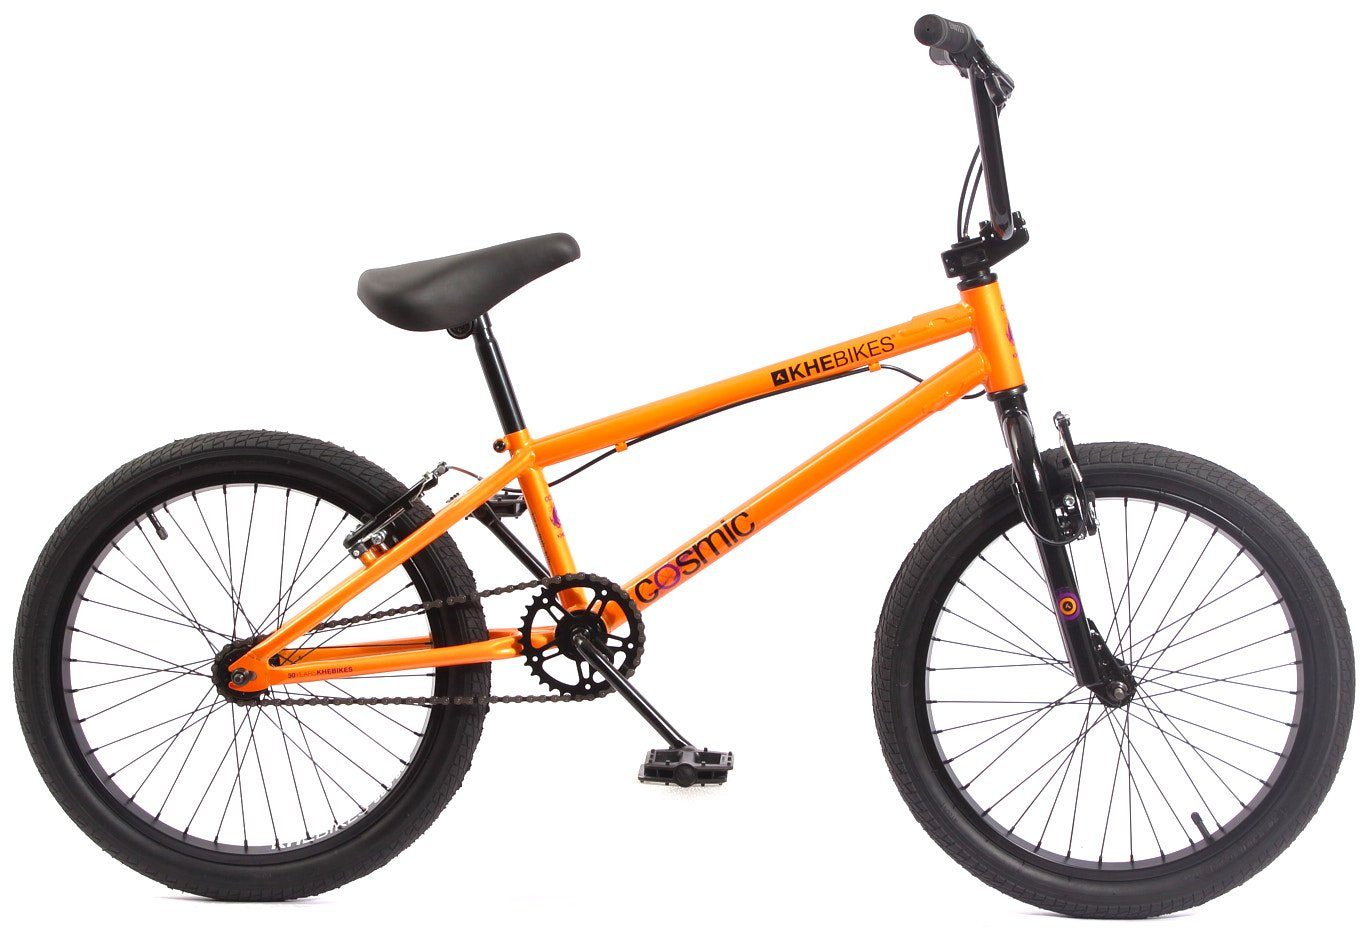 KHEbikes BMX-Rad orange Zoll, COSMIC, 20 AFFIX 11.1kg, 360° Rotor